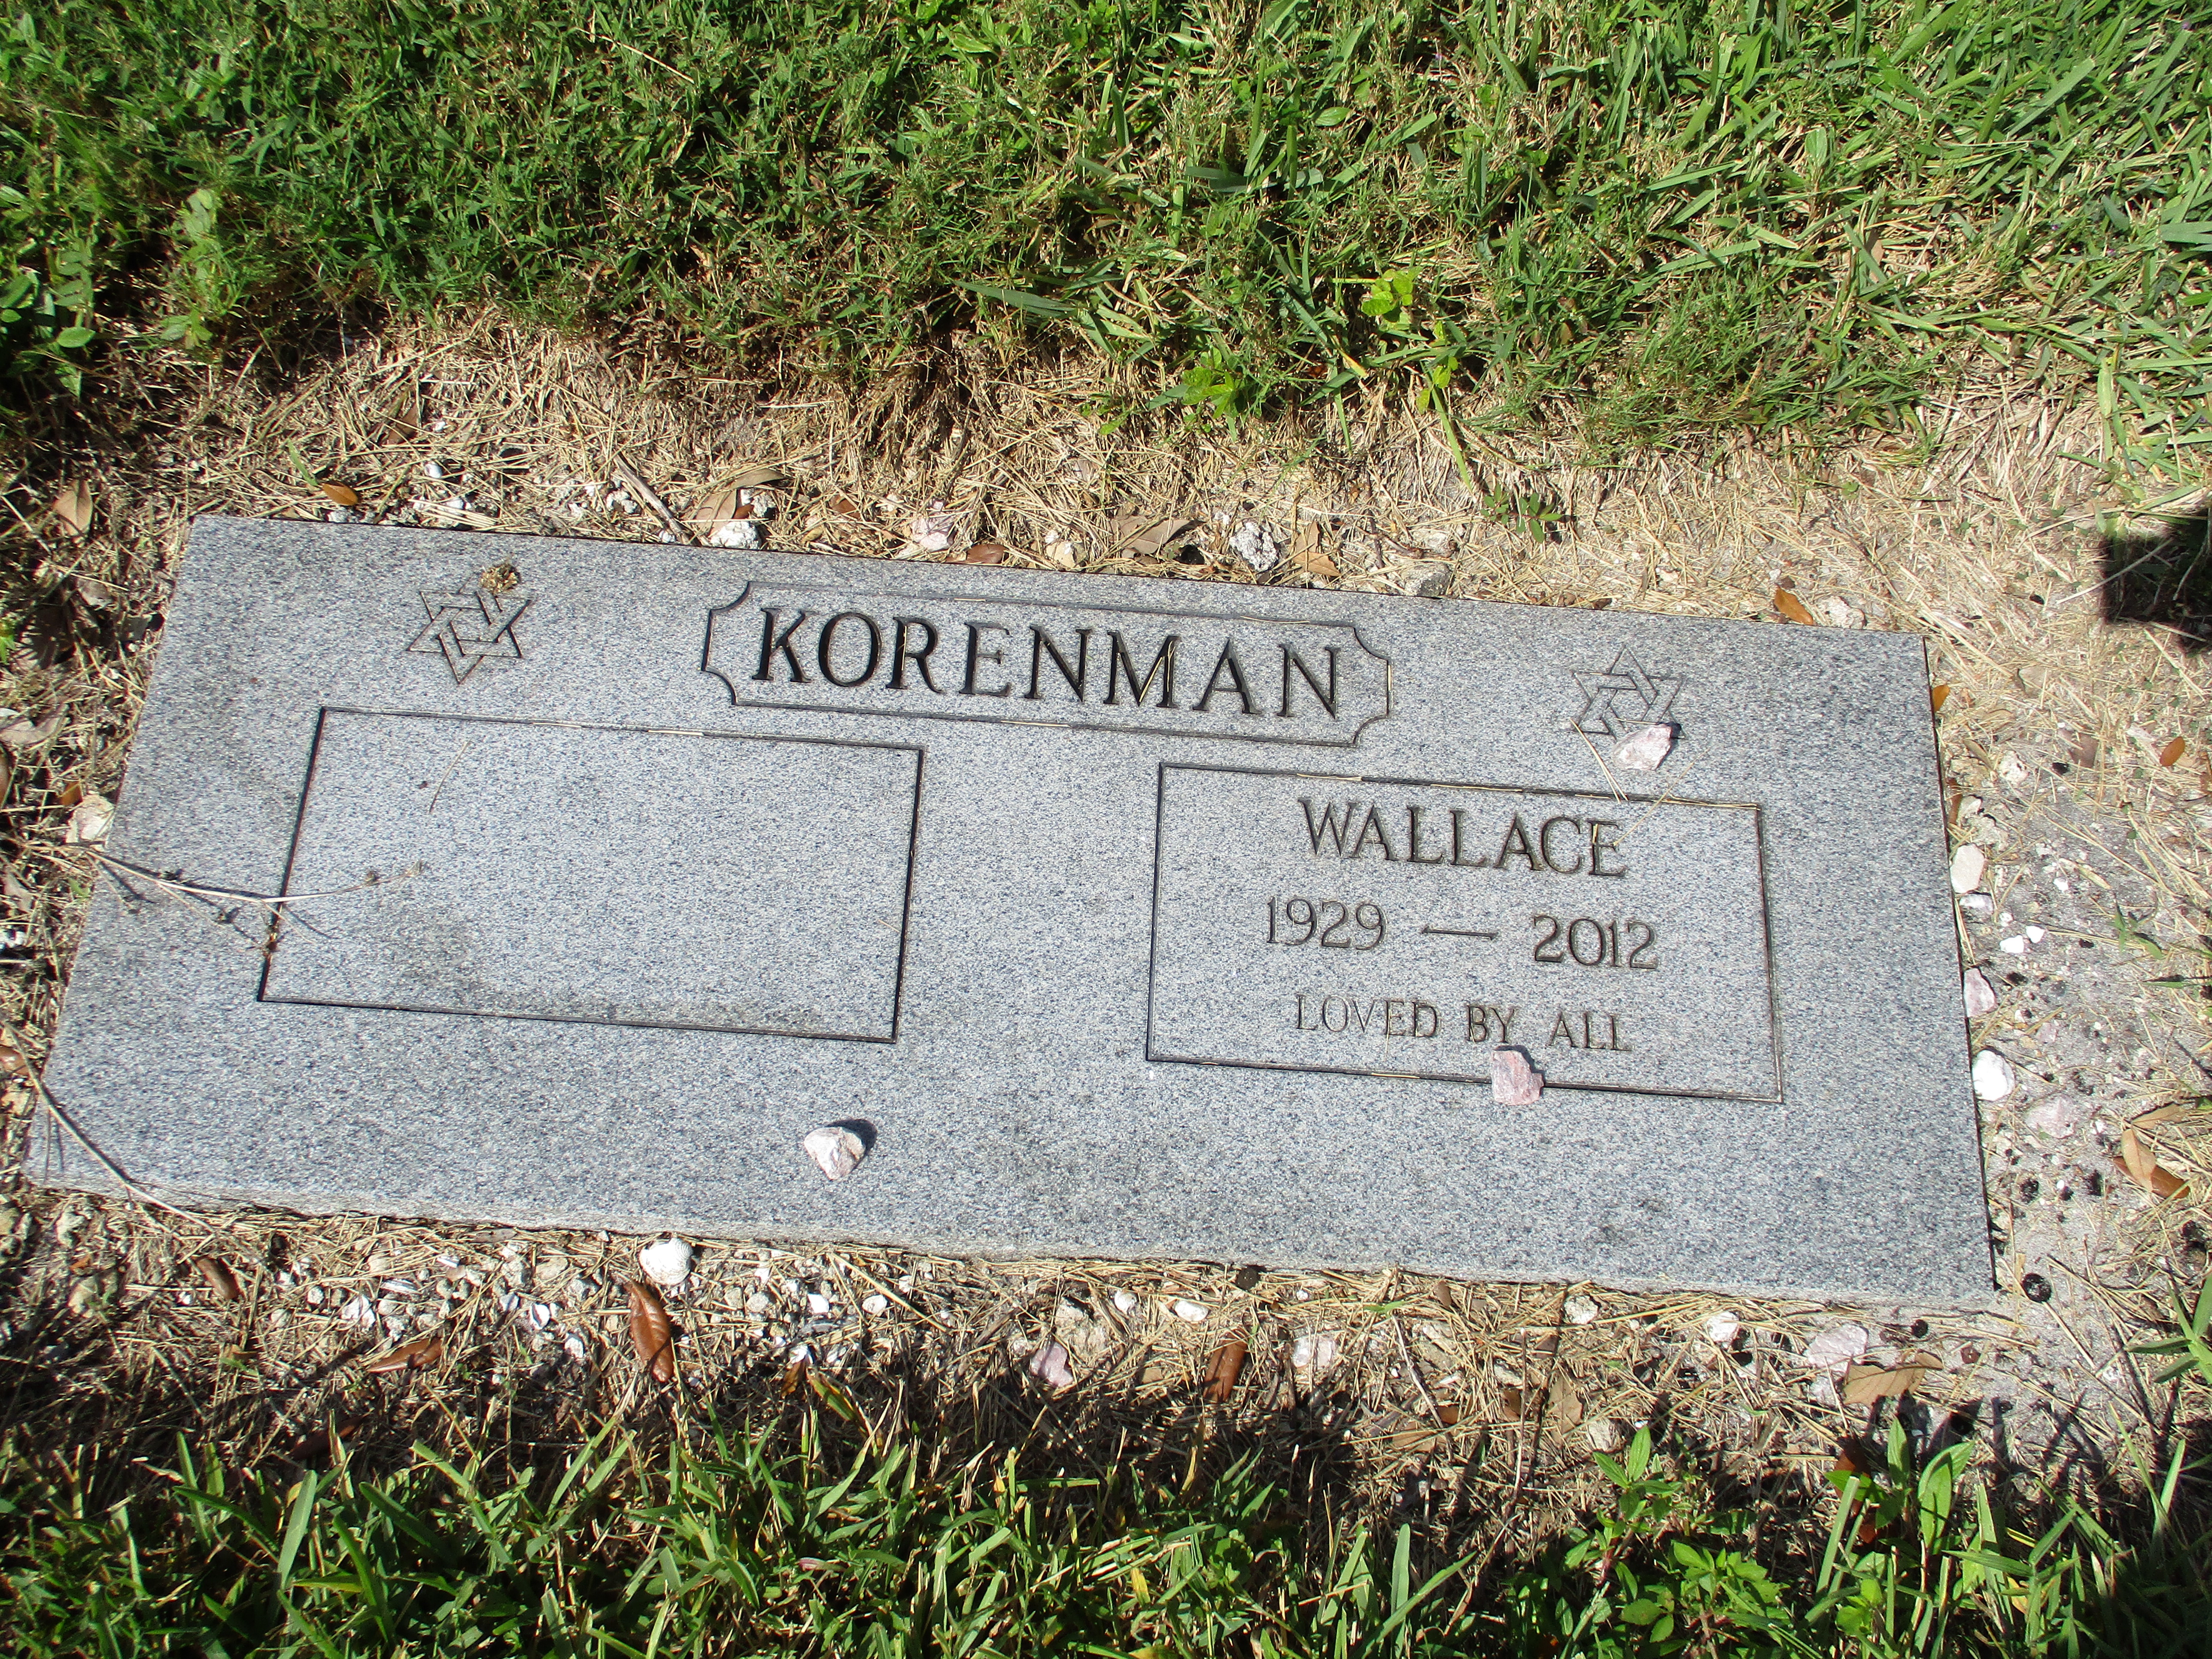 Wallace Korenman